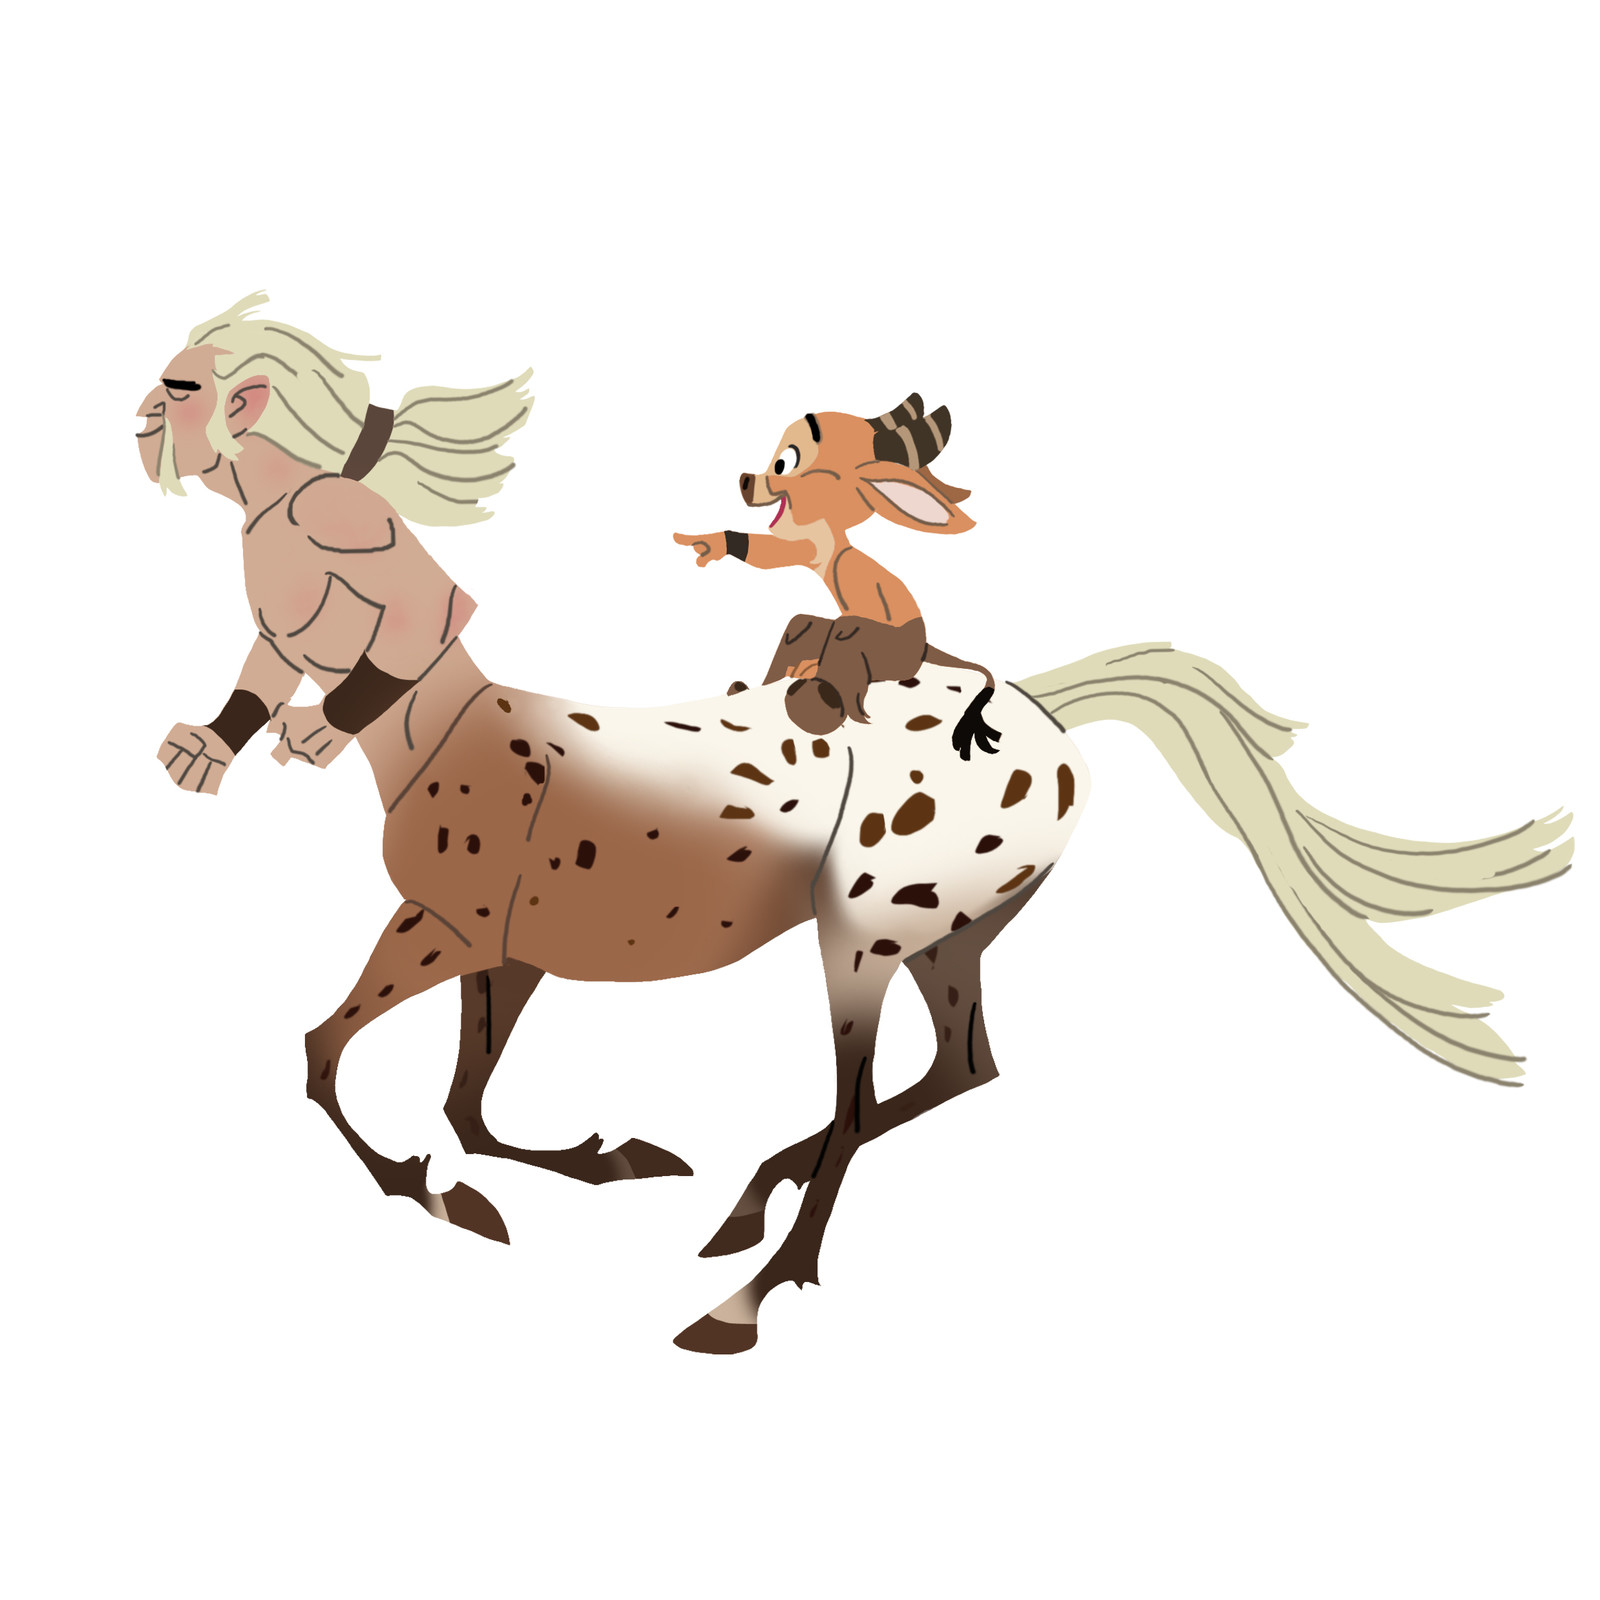 Centaur and Young Minotaur